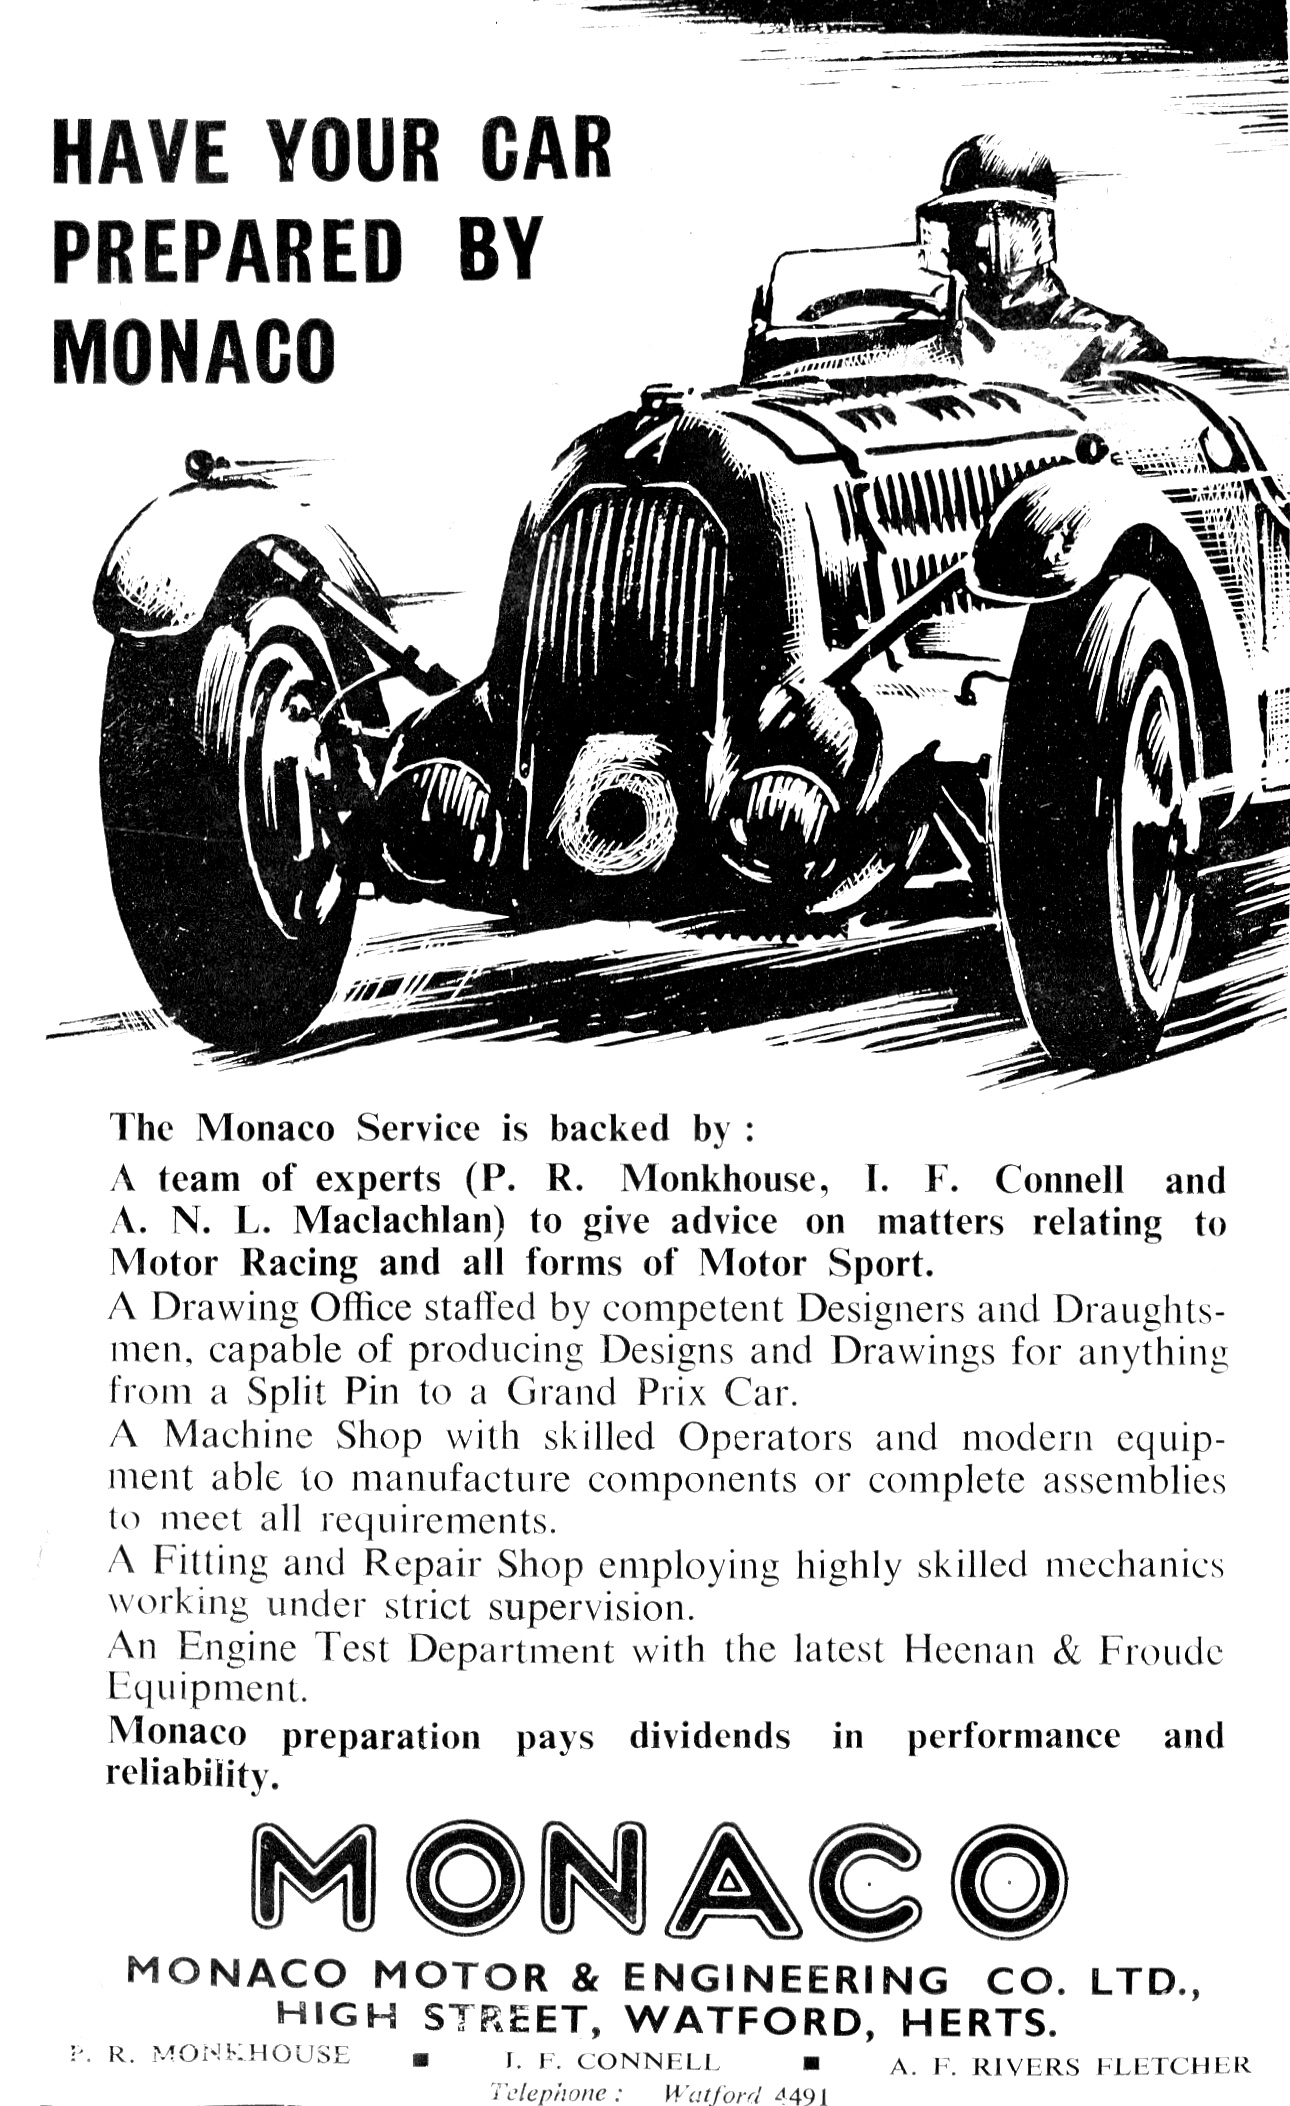 1947 British Car Advertisements